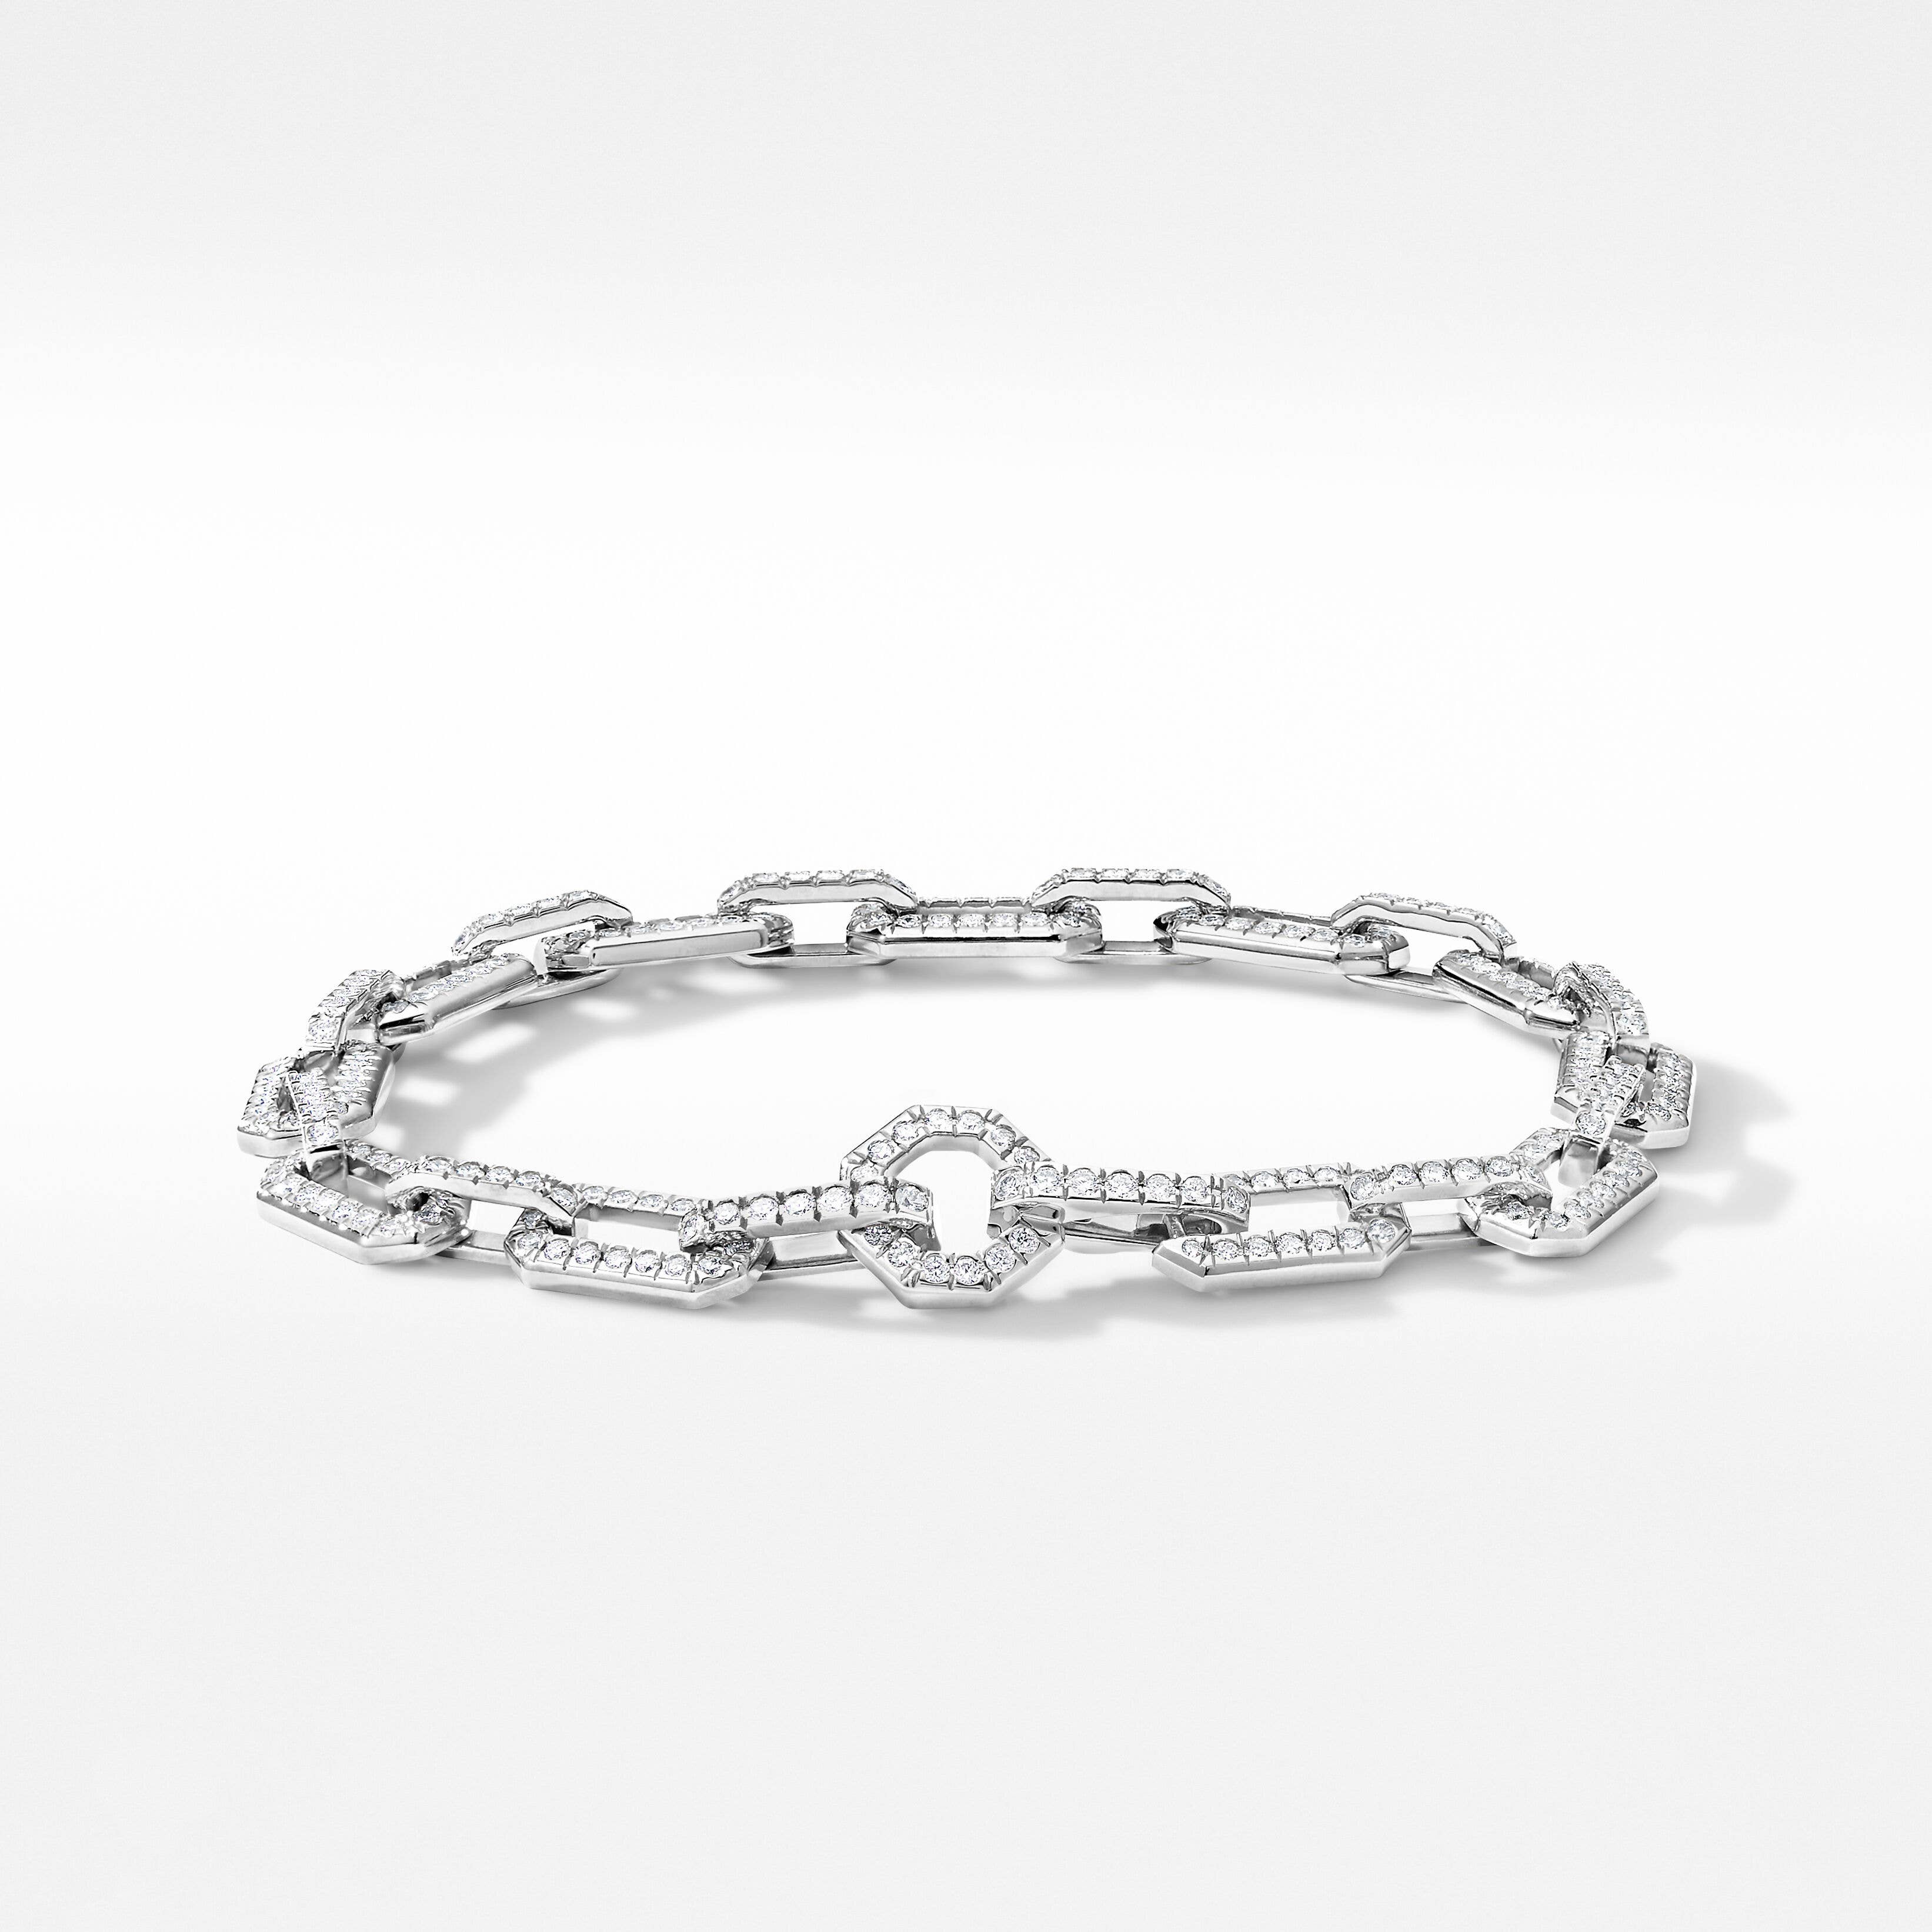 Pavé Chain Bracelet in 18K White Gold with Diamonds